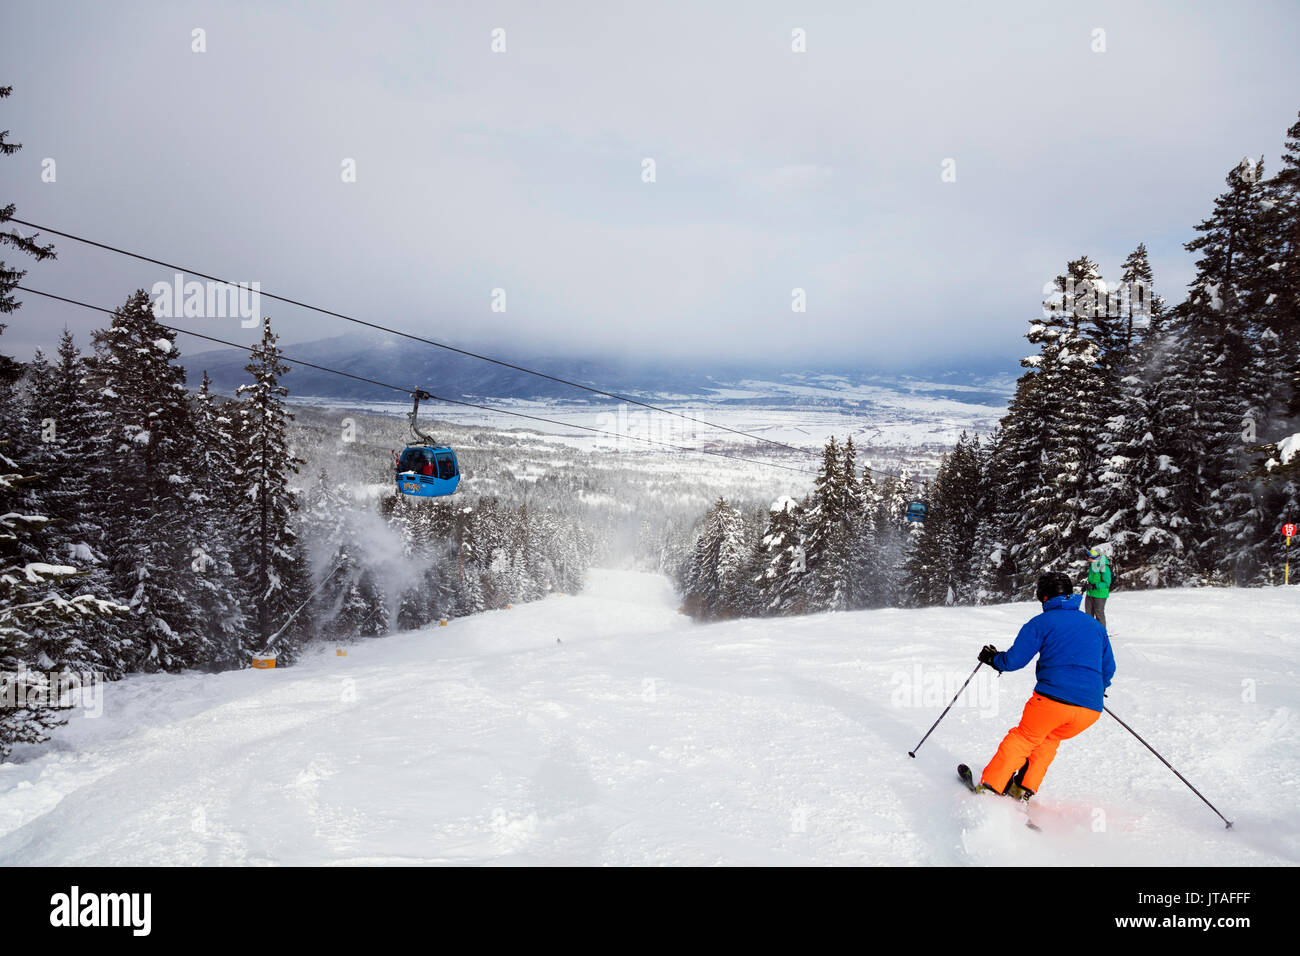 Les skieurs hors piste, resort Bansko, Bulgarie, Europe Banque D'Images